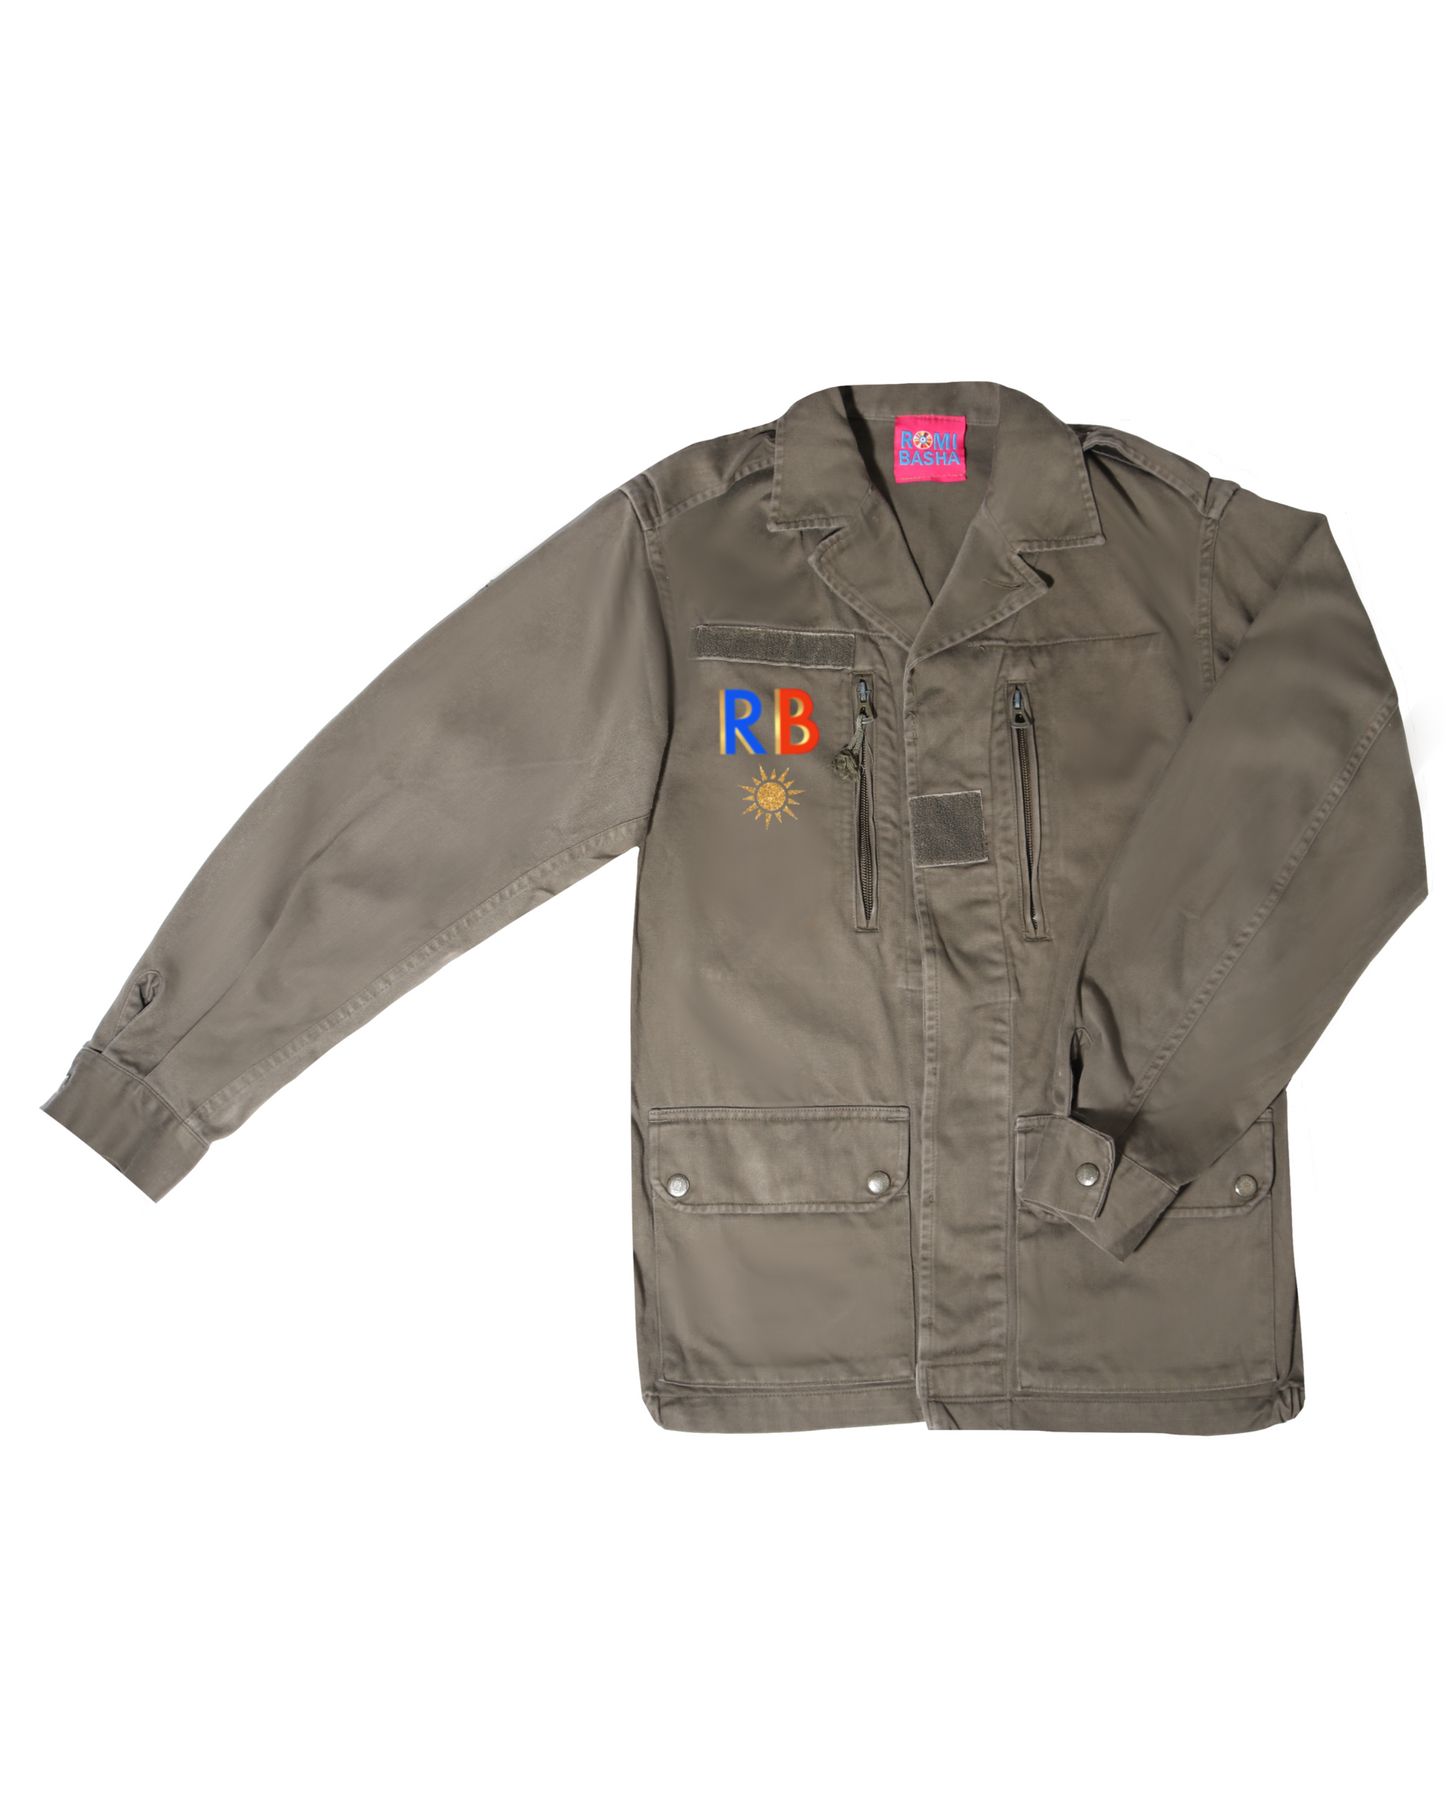 Vintage Army Jacket | Customizable